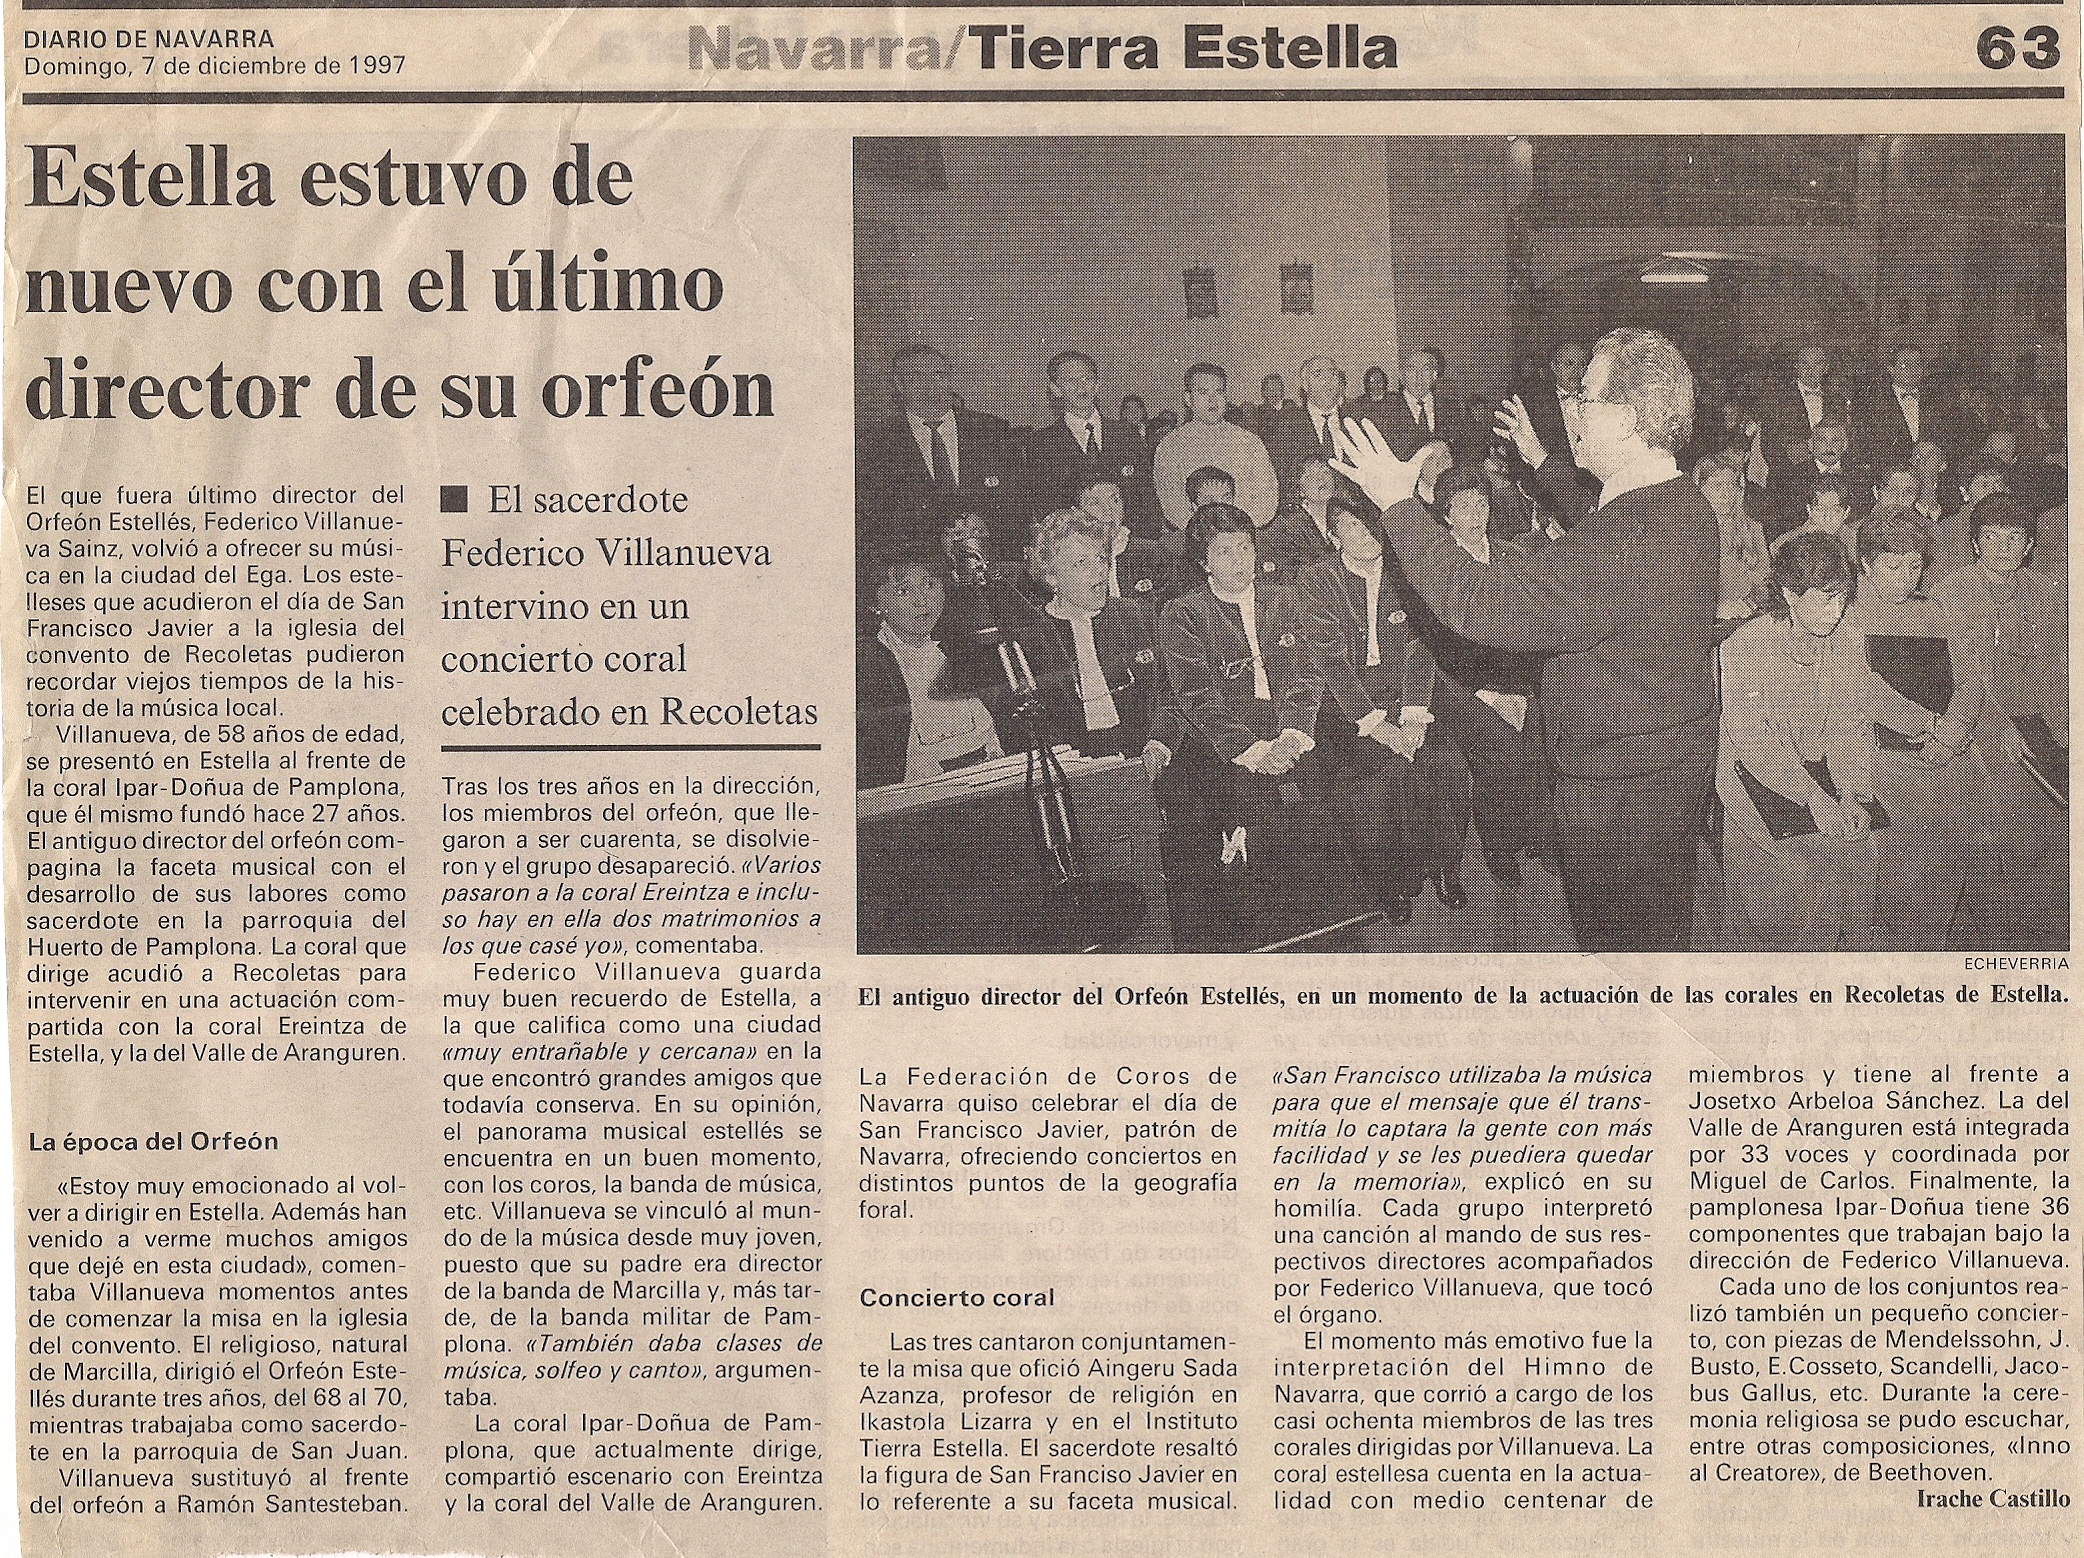 Año 1997. Recorte de prensa (Diario de Navarra)